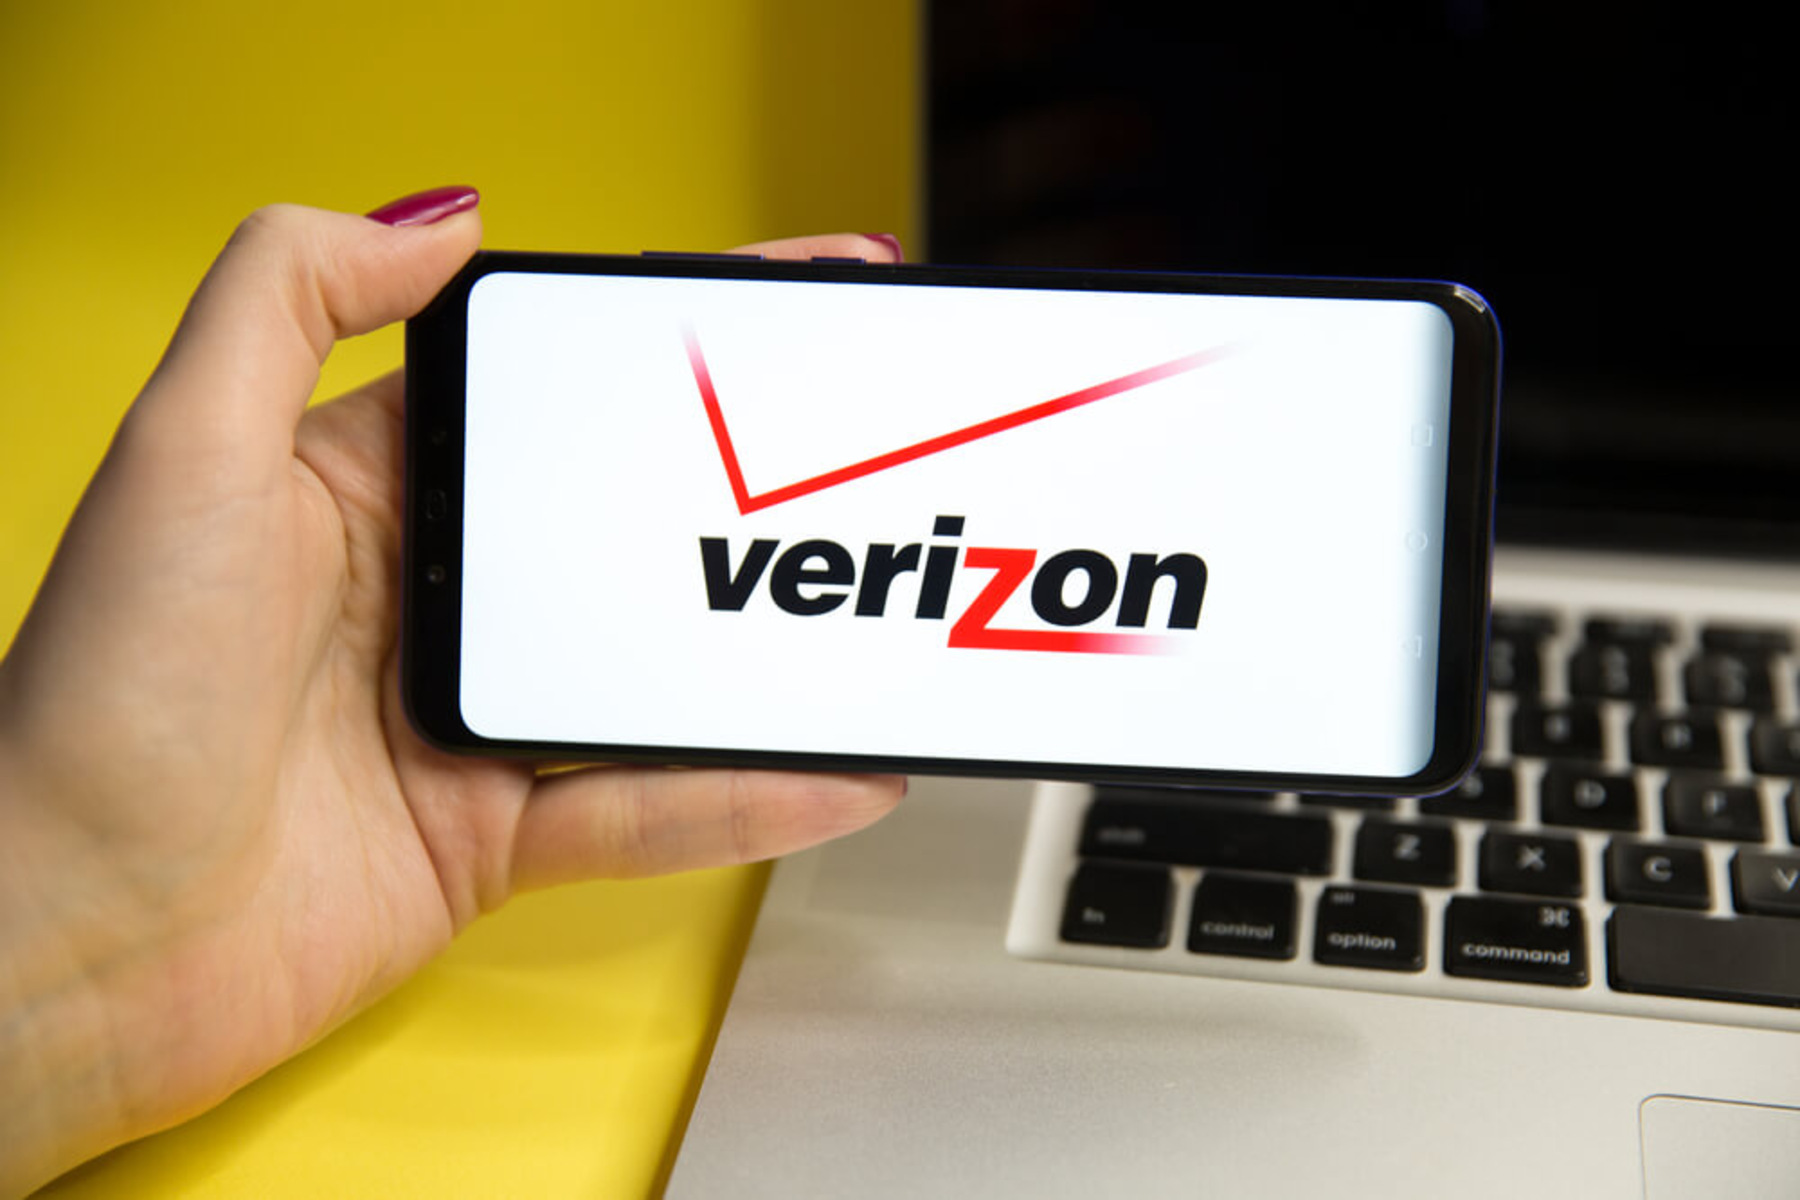 Verizon IPhone Hotspot Setup: Step-by-Step Guide